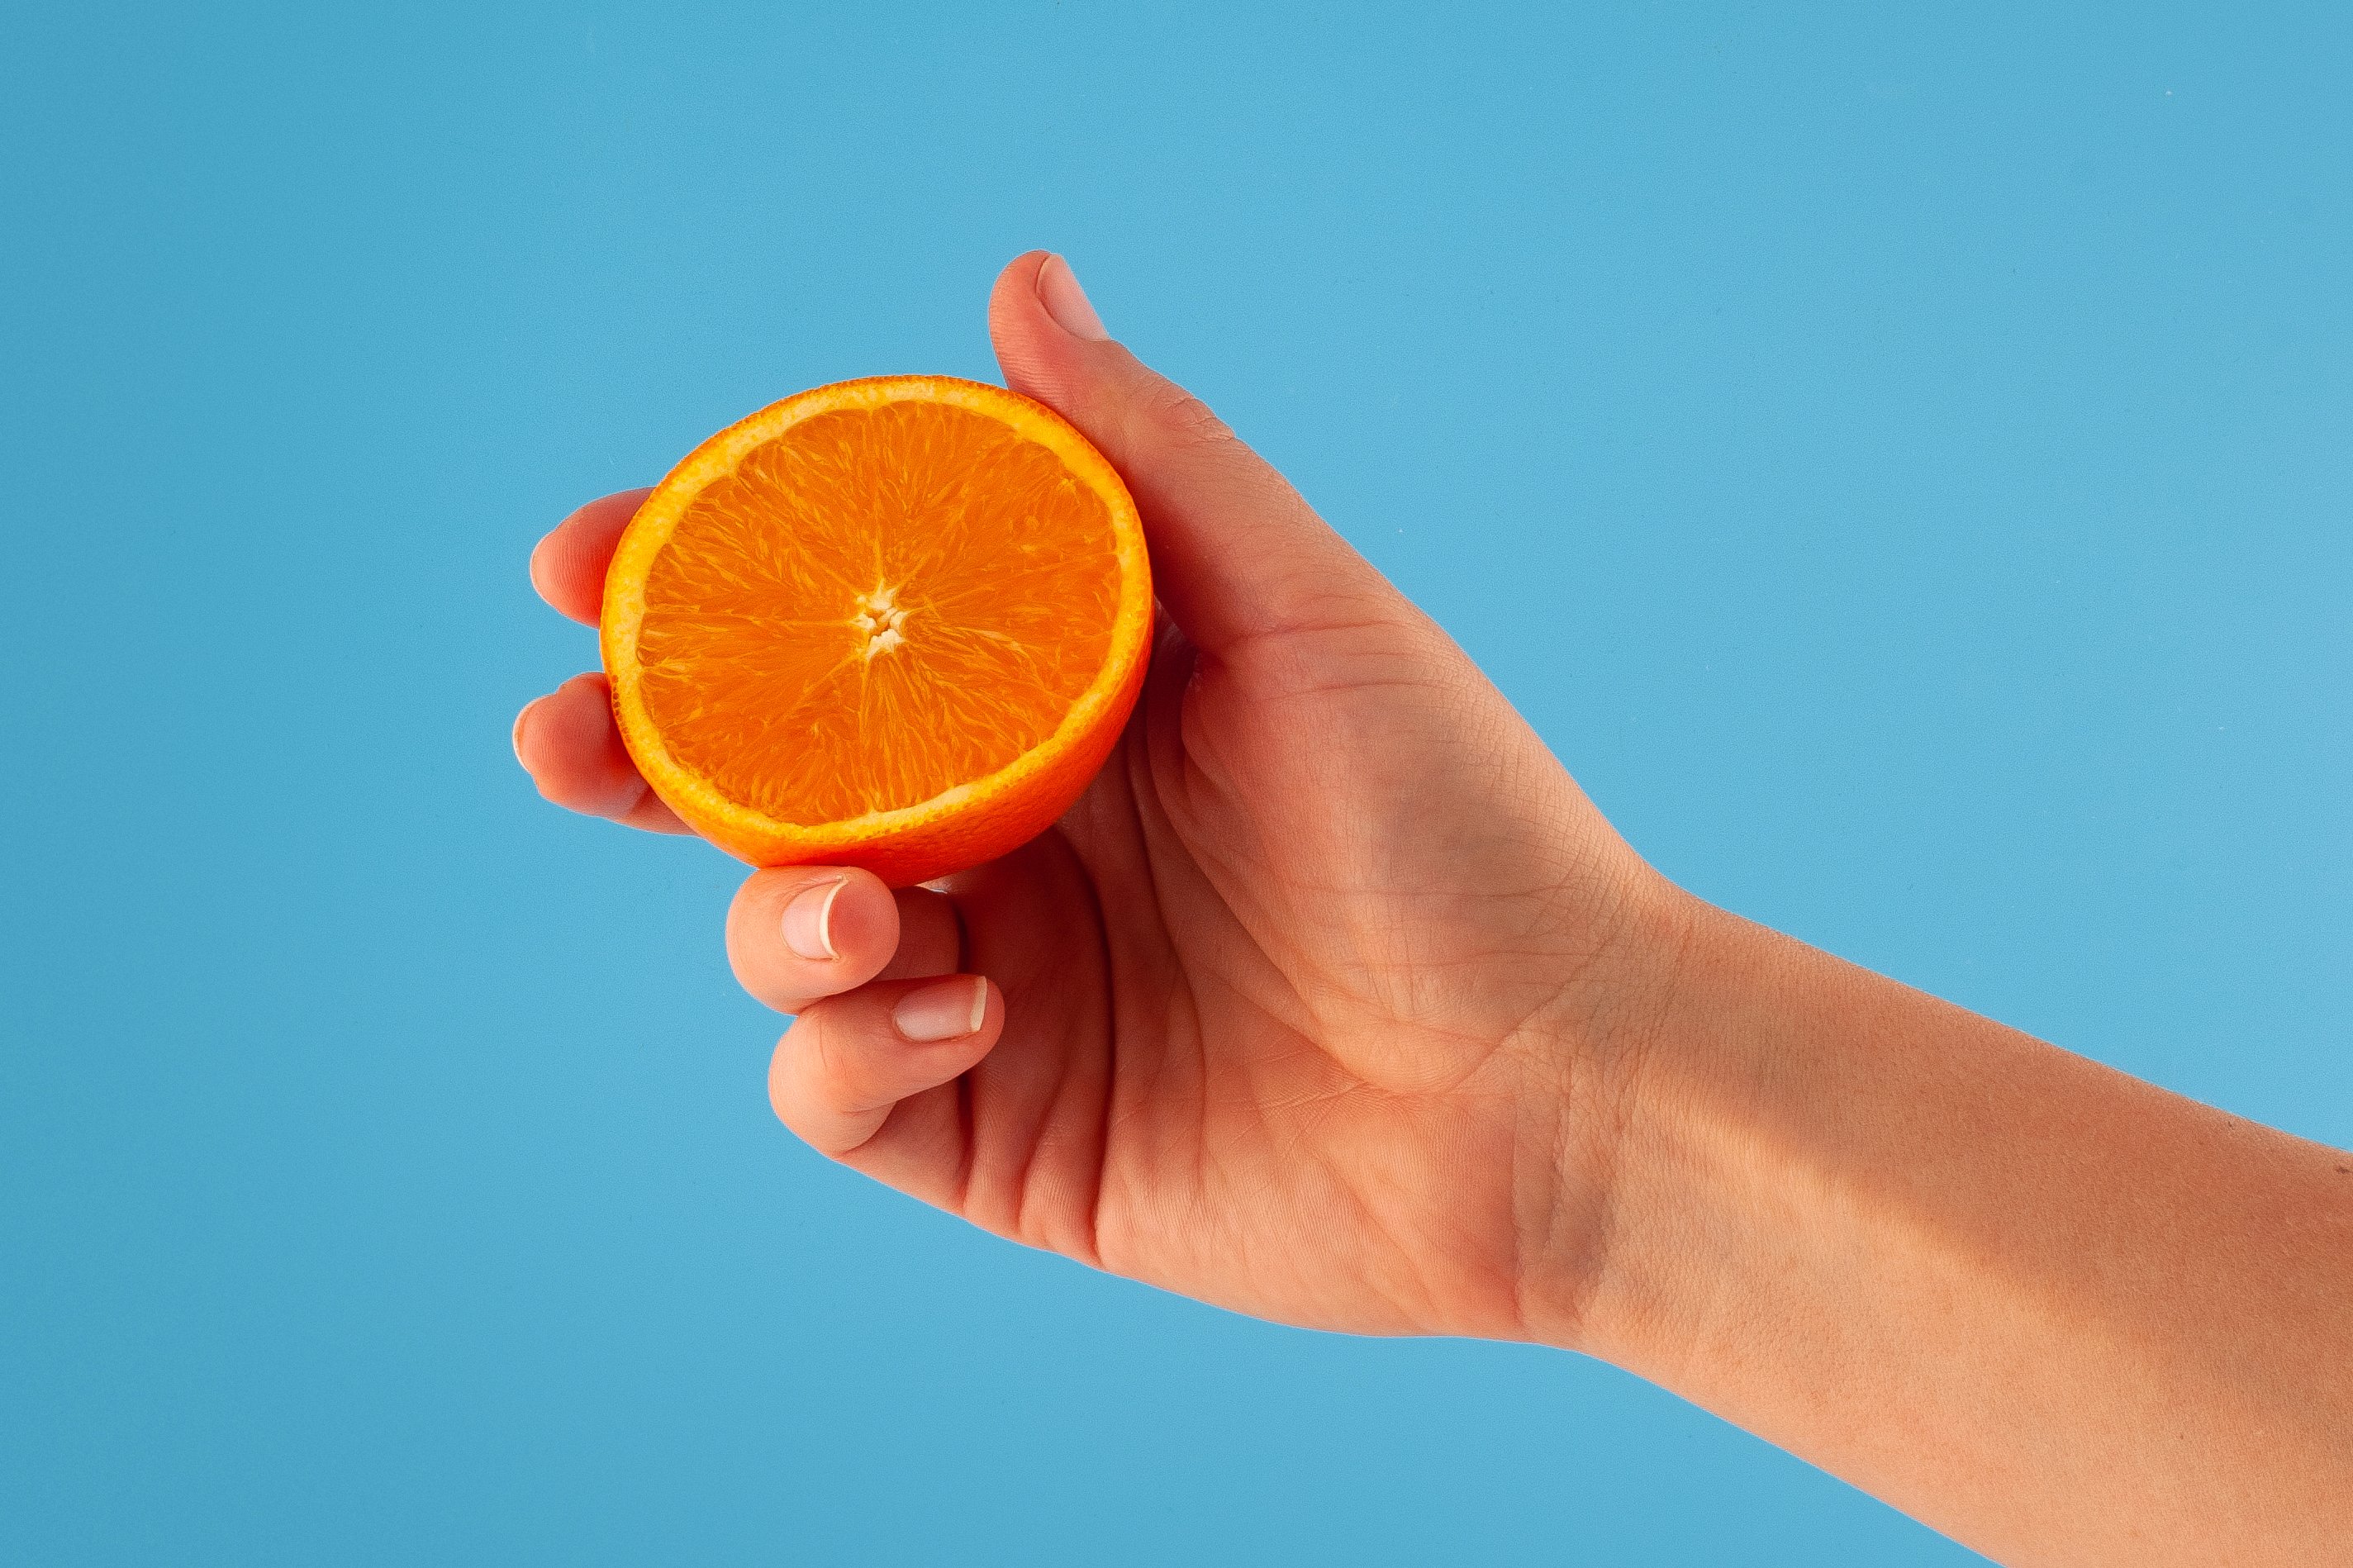 Orange in hand